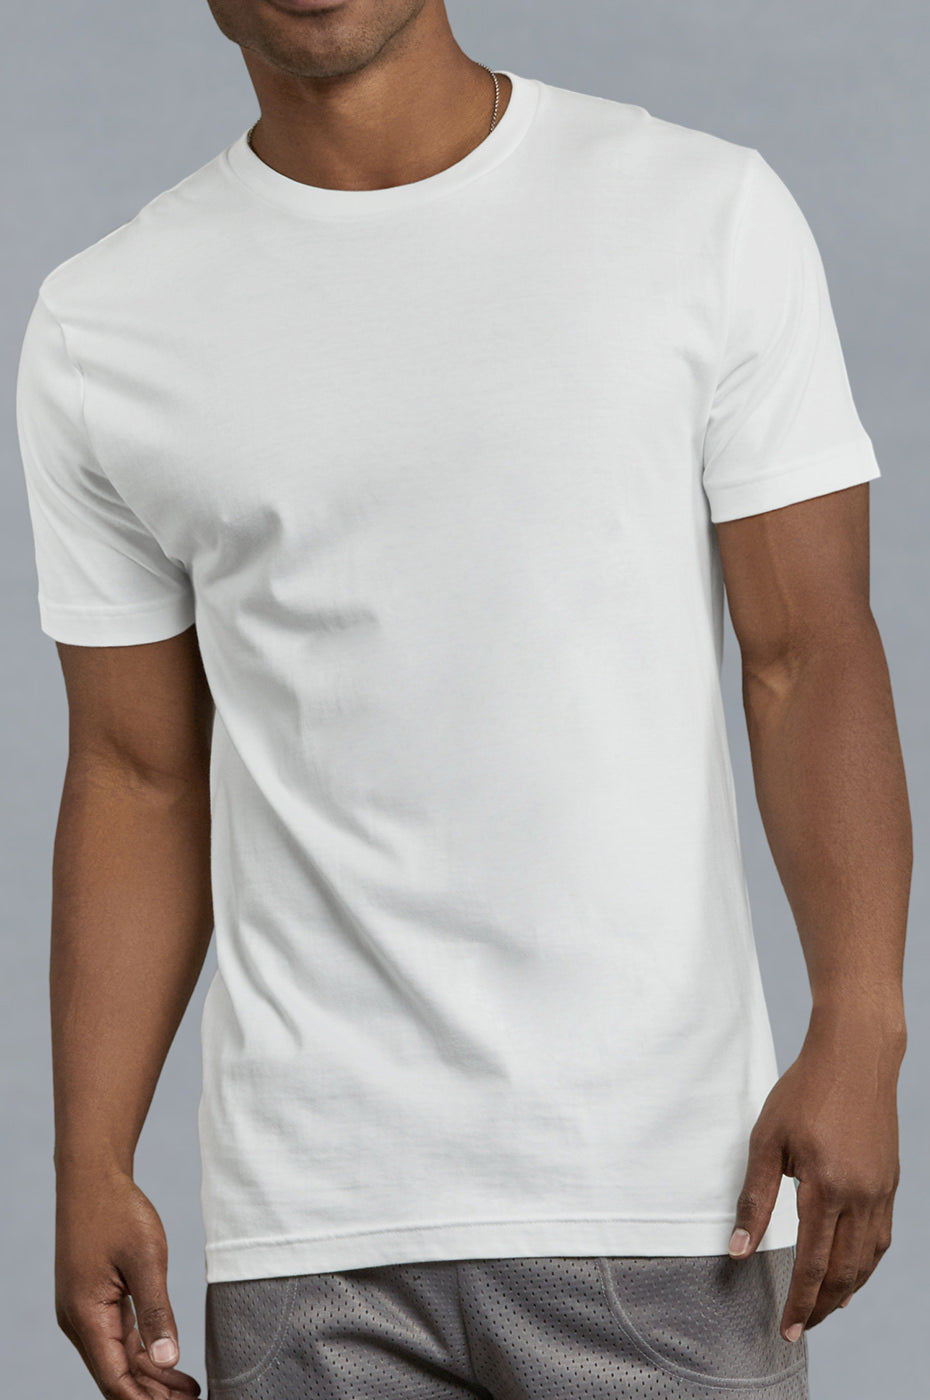 Men's Essentials Knocker PACK OF 3 Lightweight Cotton Shirts  (TK3601-WHT)